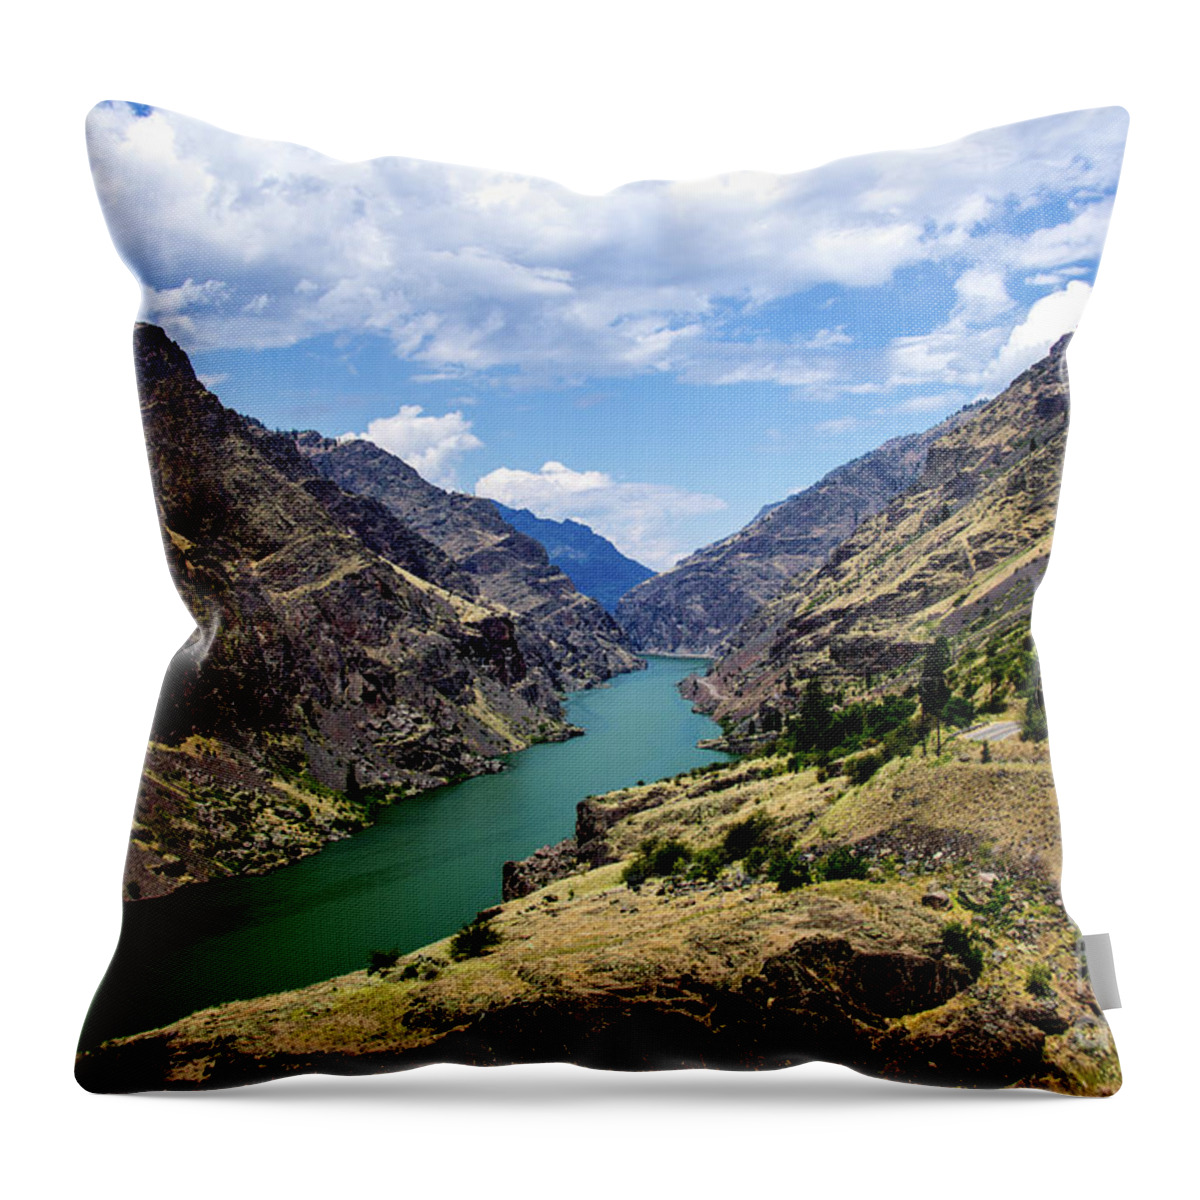 Boise Idaho Throw Pillow featuring the photograph Oxbow Dam Tailwater Idaho Journey Landscape Photography by Kaylyn Franks by Kaylyn Franks